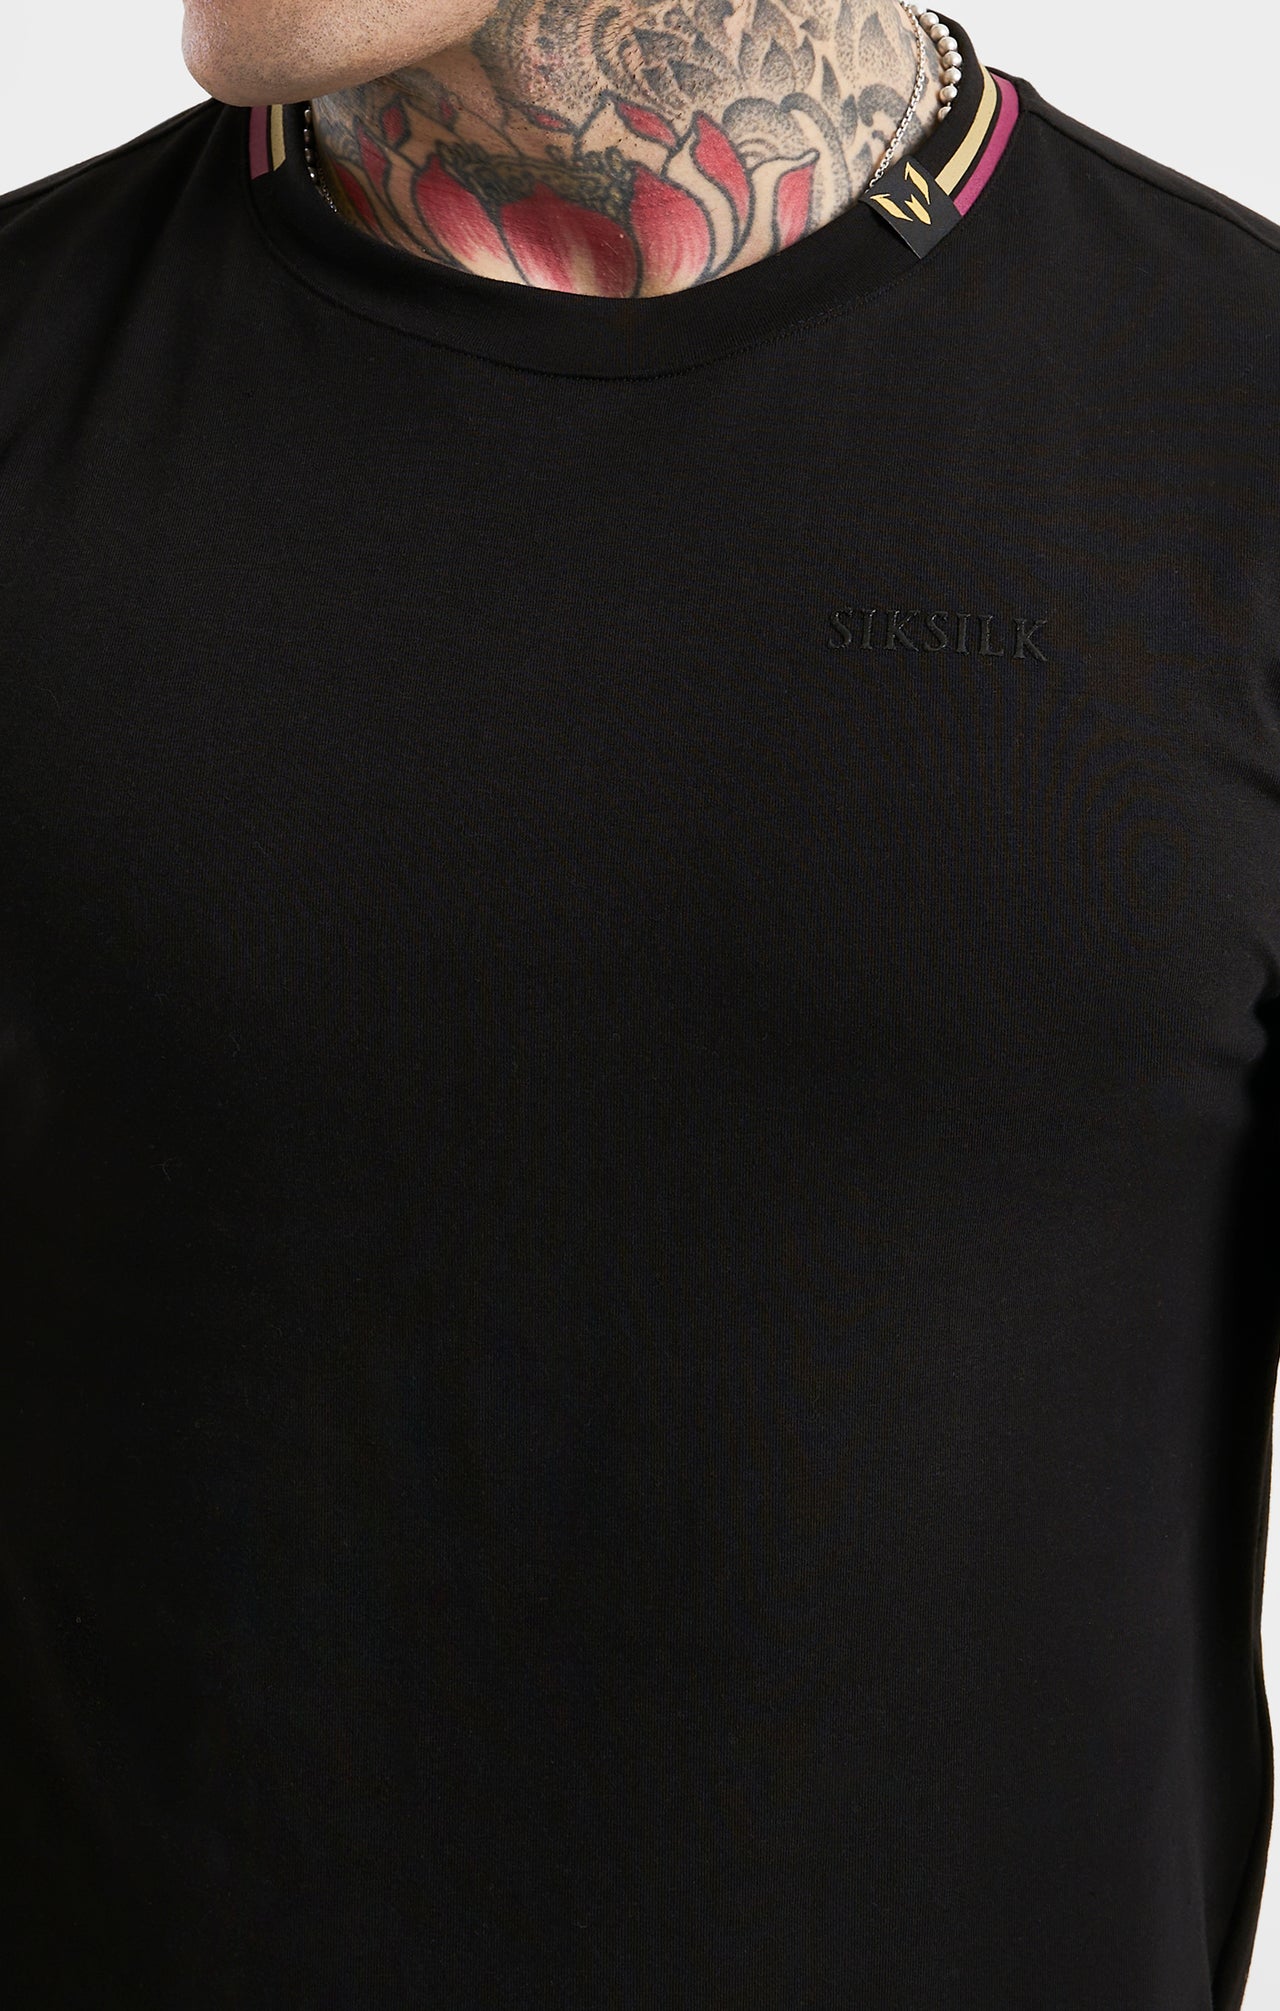 Messi x SikSilk Black Collar Muscle Fit T-Shirt (1)